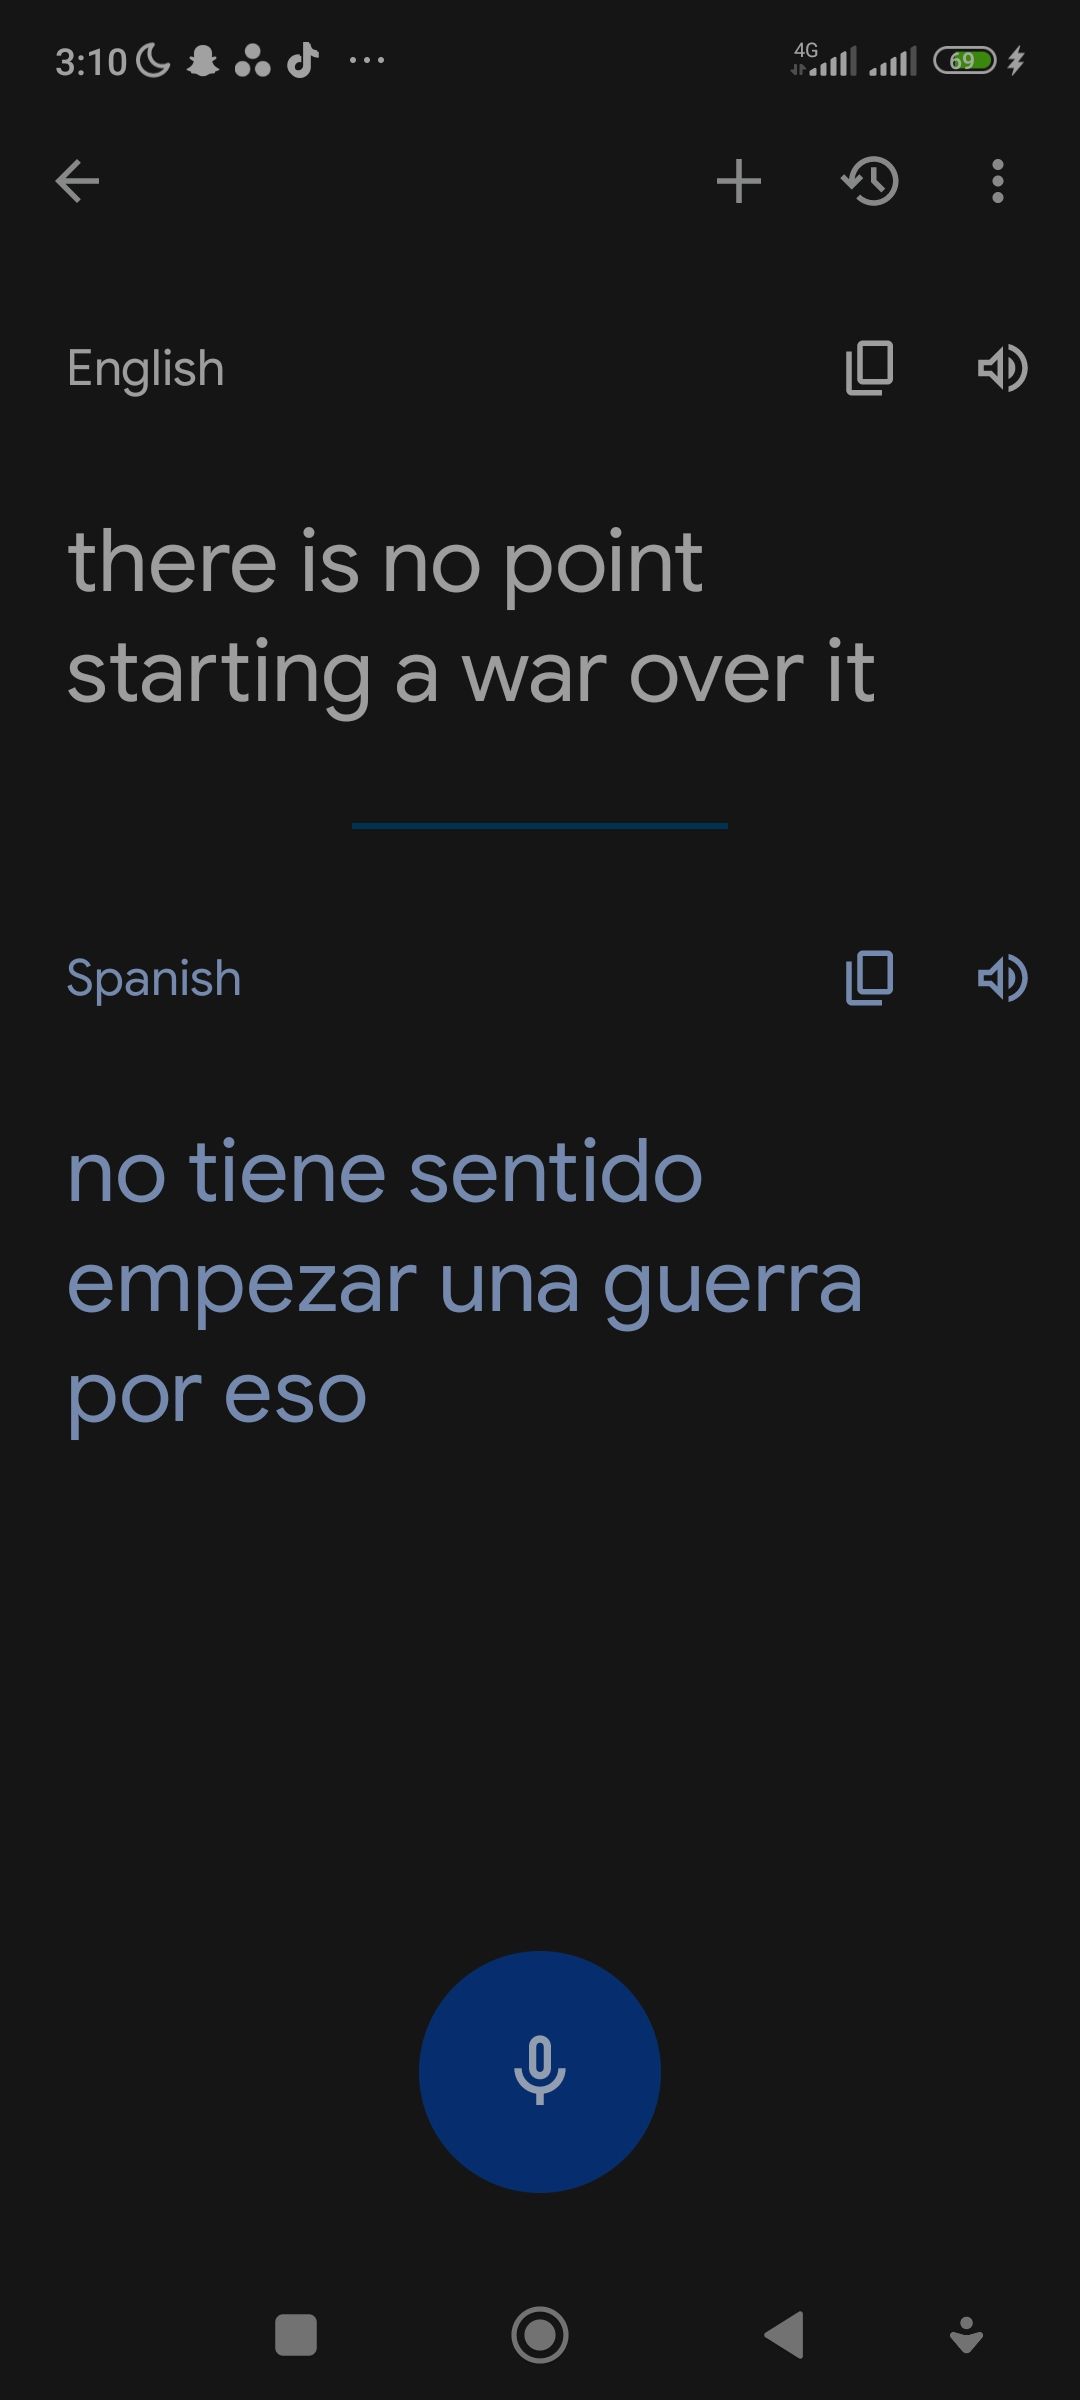 Result of translation and transcription on the Google Translate app